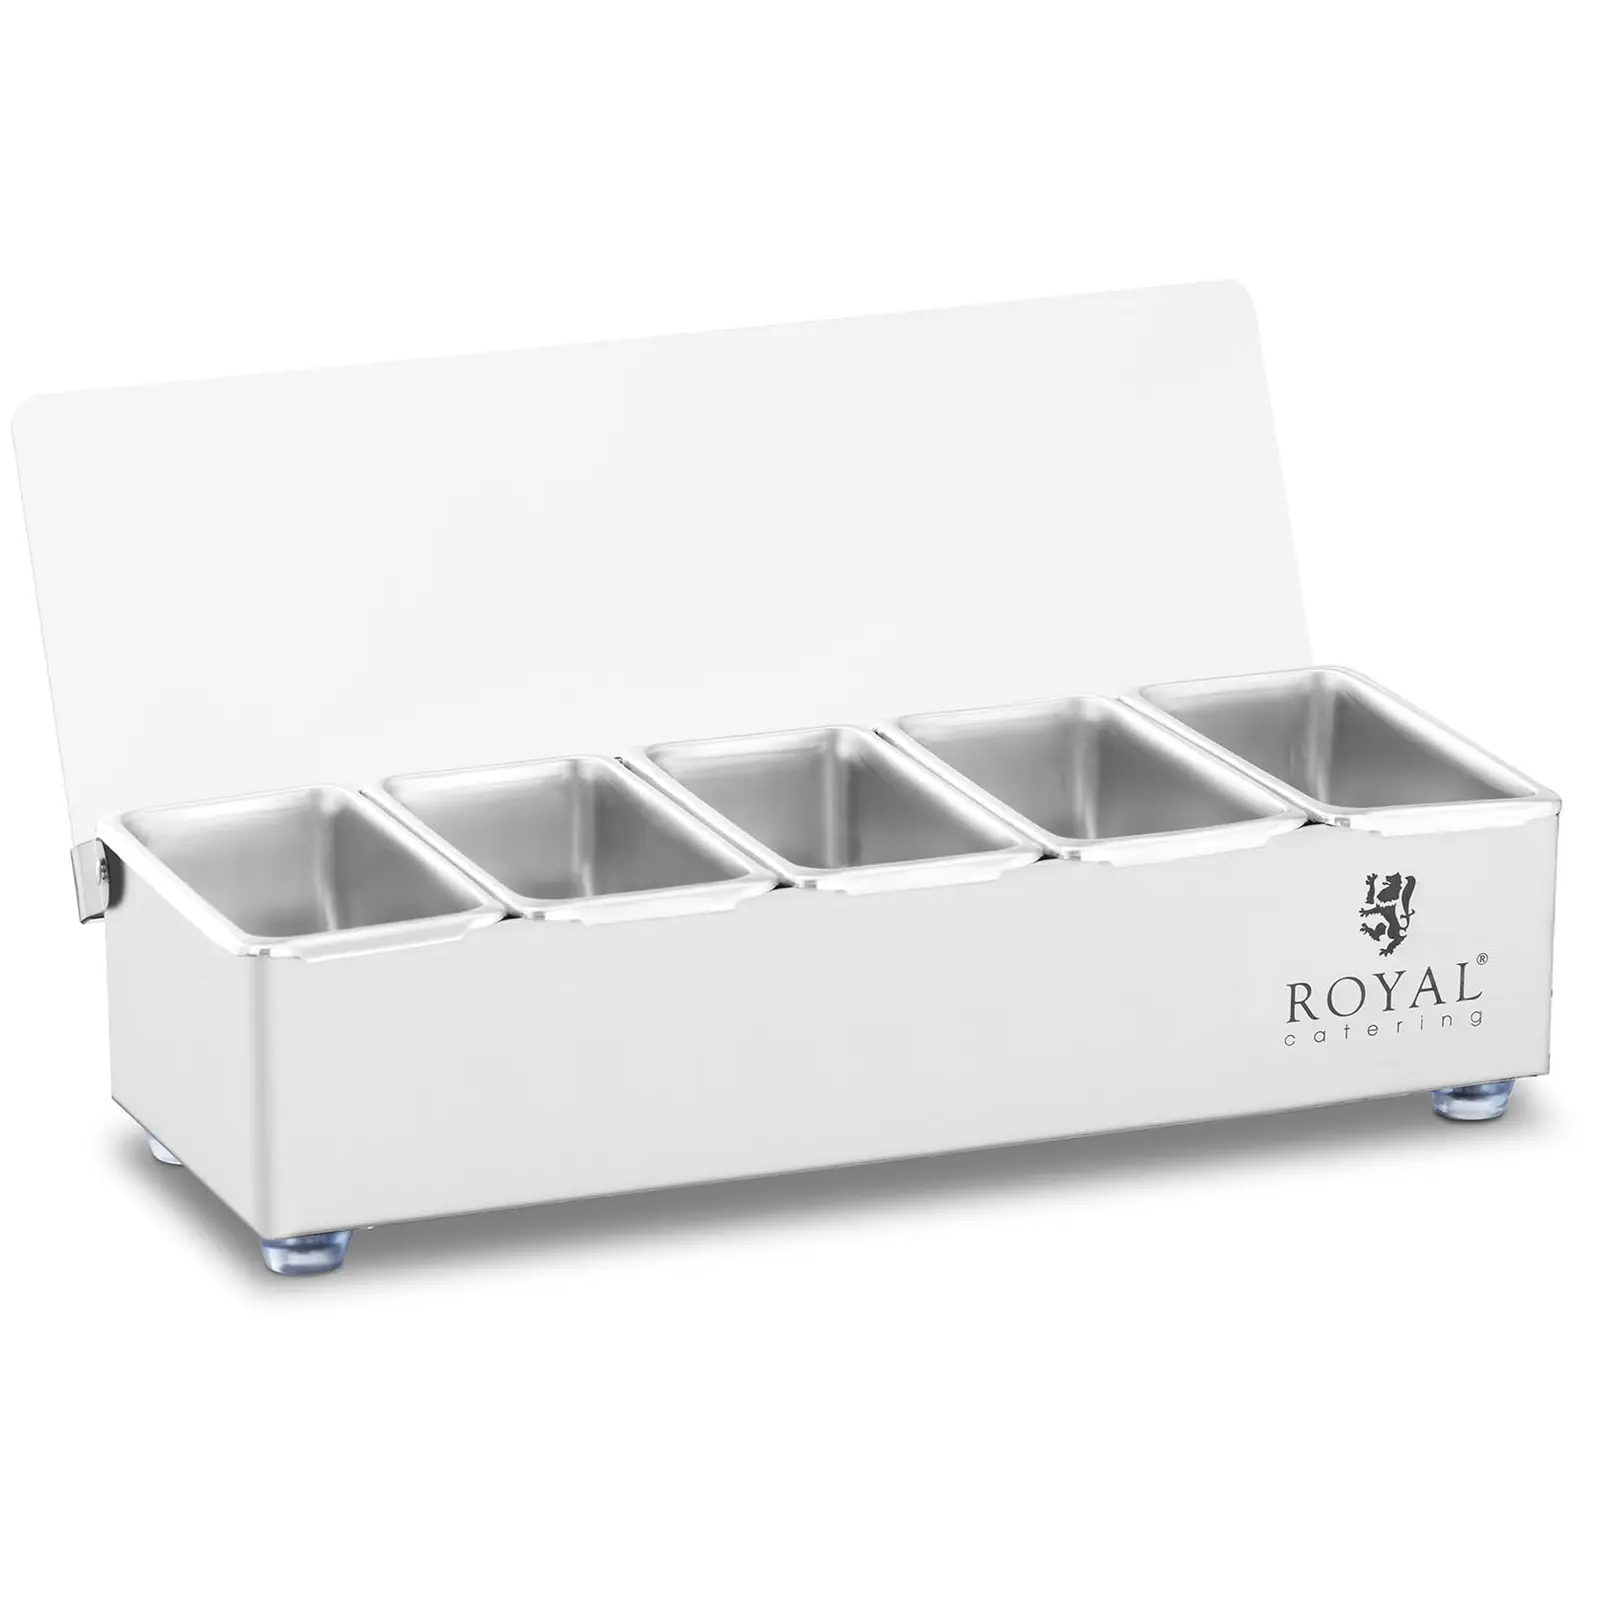 Zutatenbehälter - Edelstahl - 5 x 0,4 L - Royal Catering